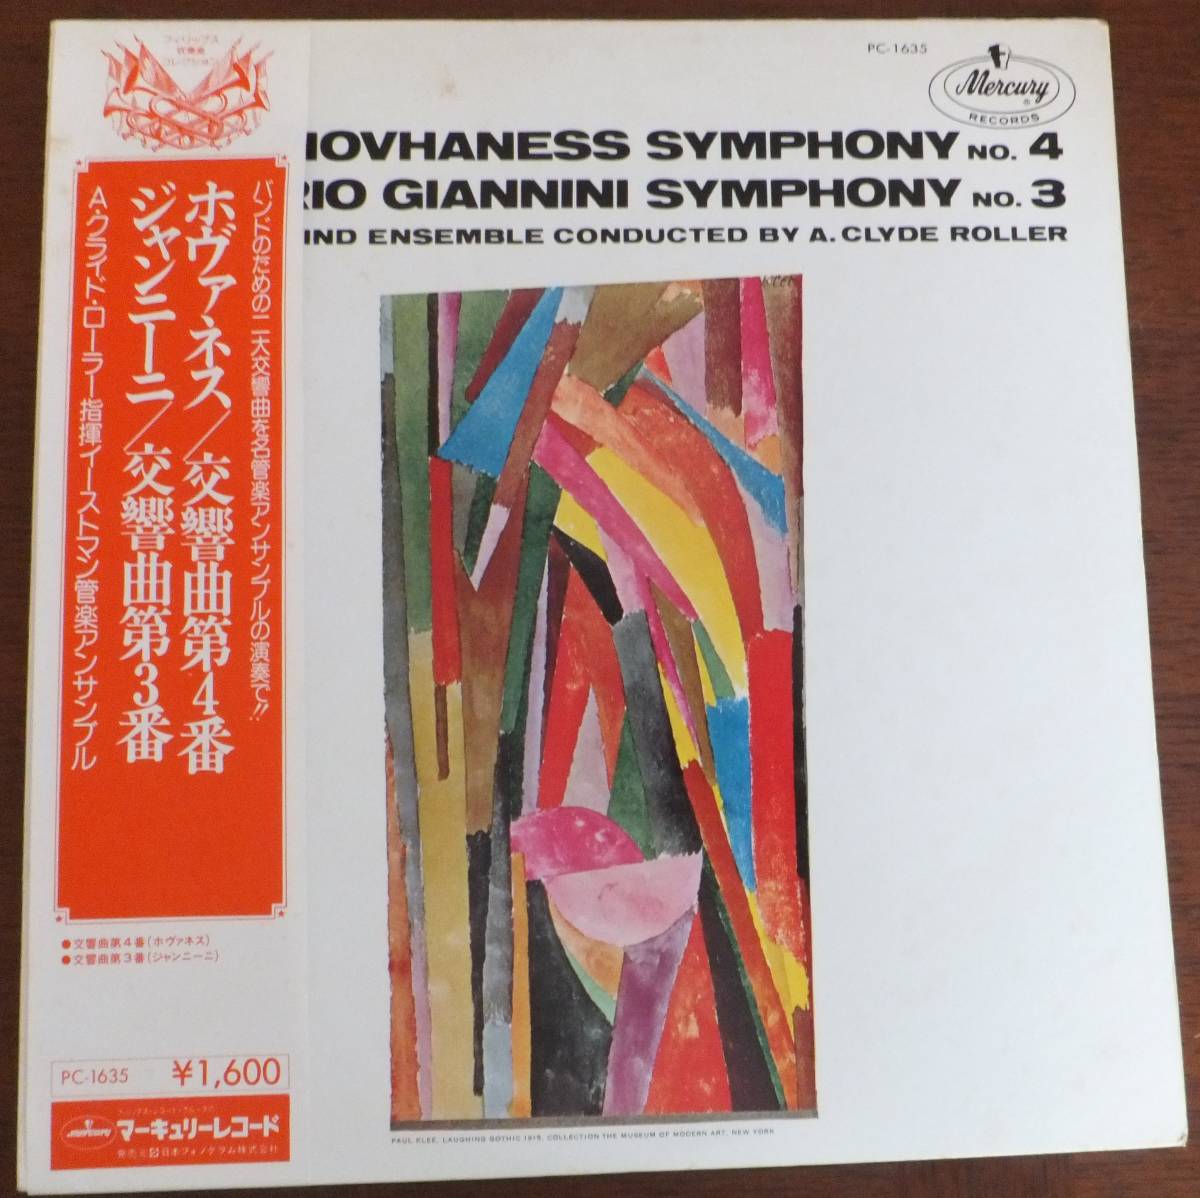 LP ho vanes symphony no. 4 number : Gianni - two symphony no. 3 number A.k ride * roller finger . East man tube string ensemble 